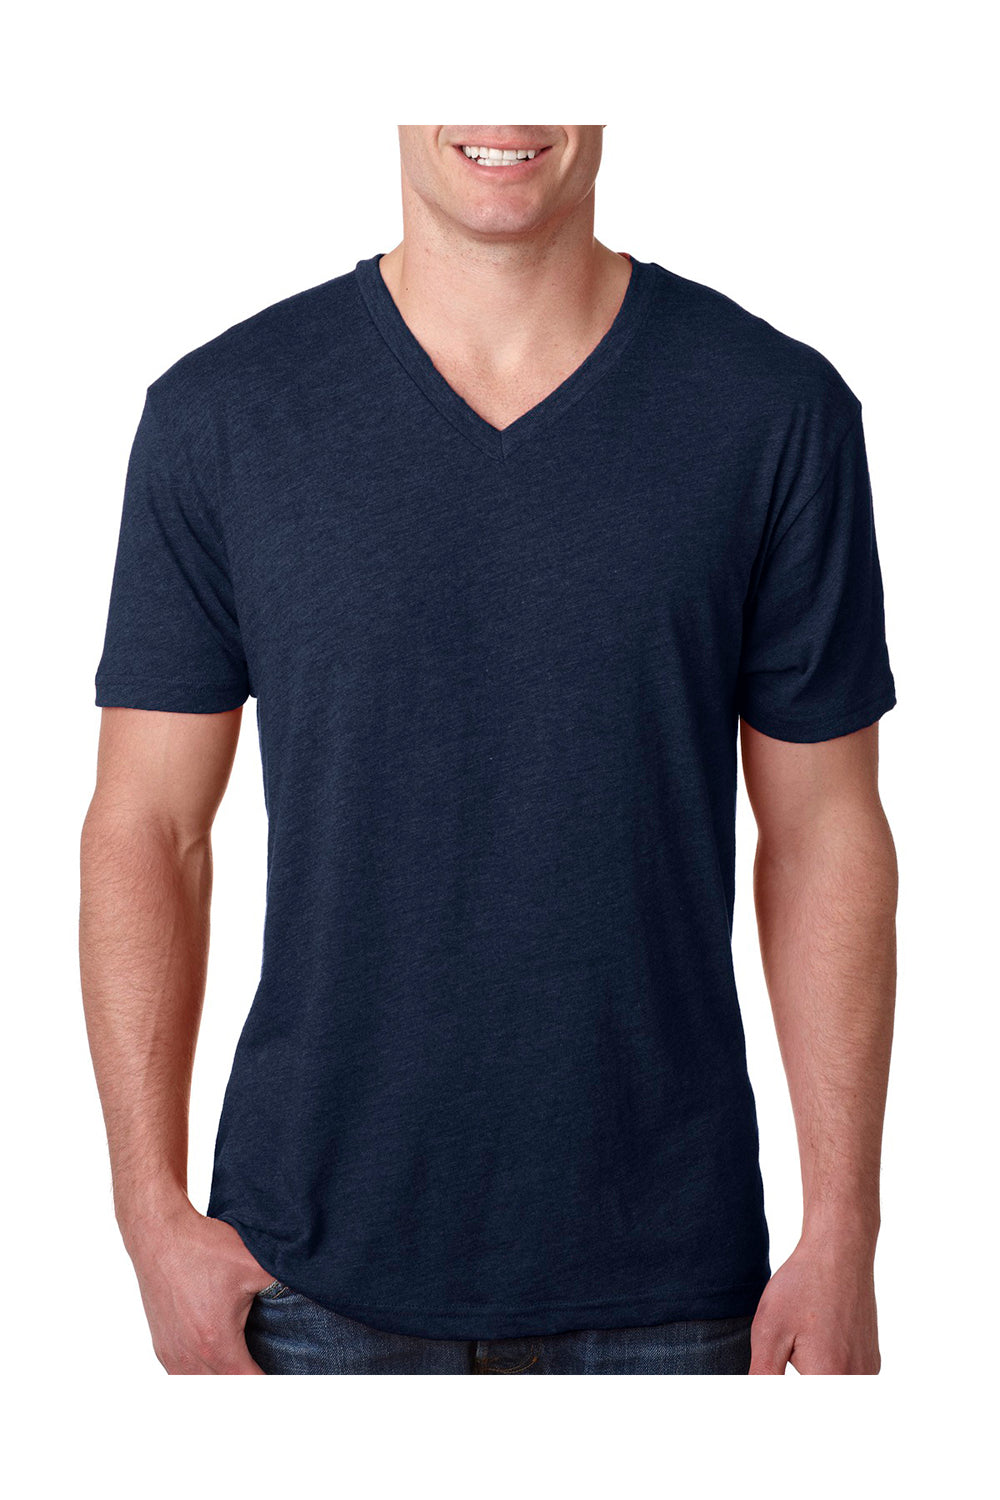 Next Level 6040 Mens Jersey Short Sleeve V-Neck T-Shirt Navy Blue Front